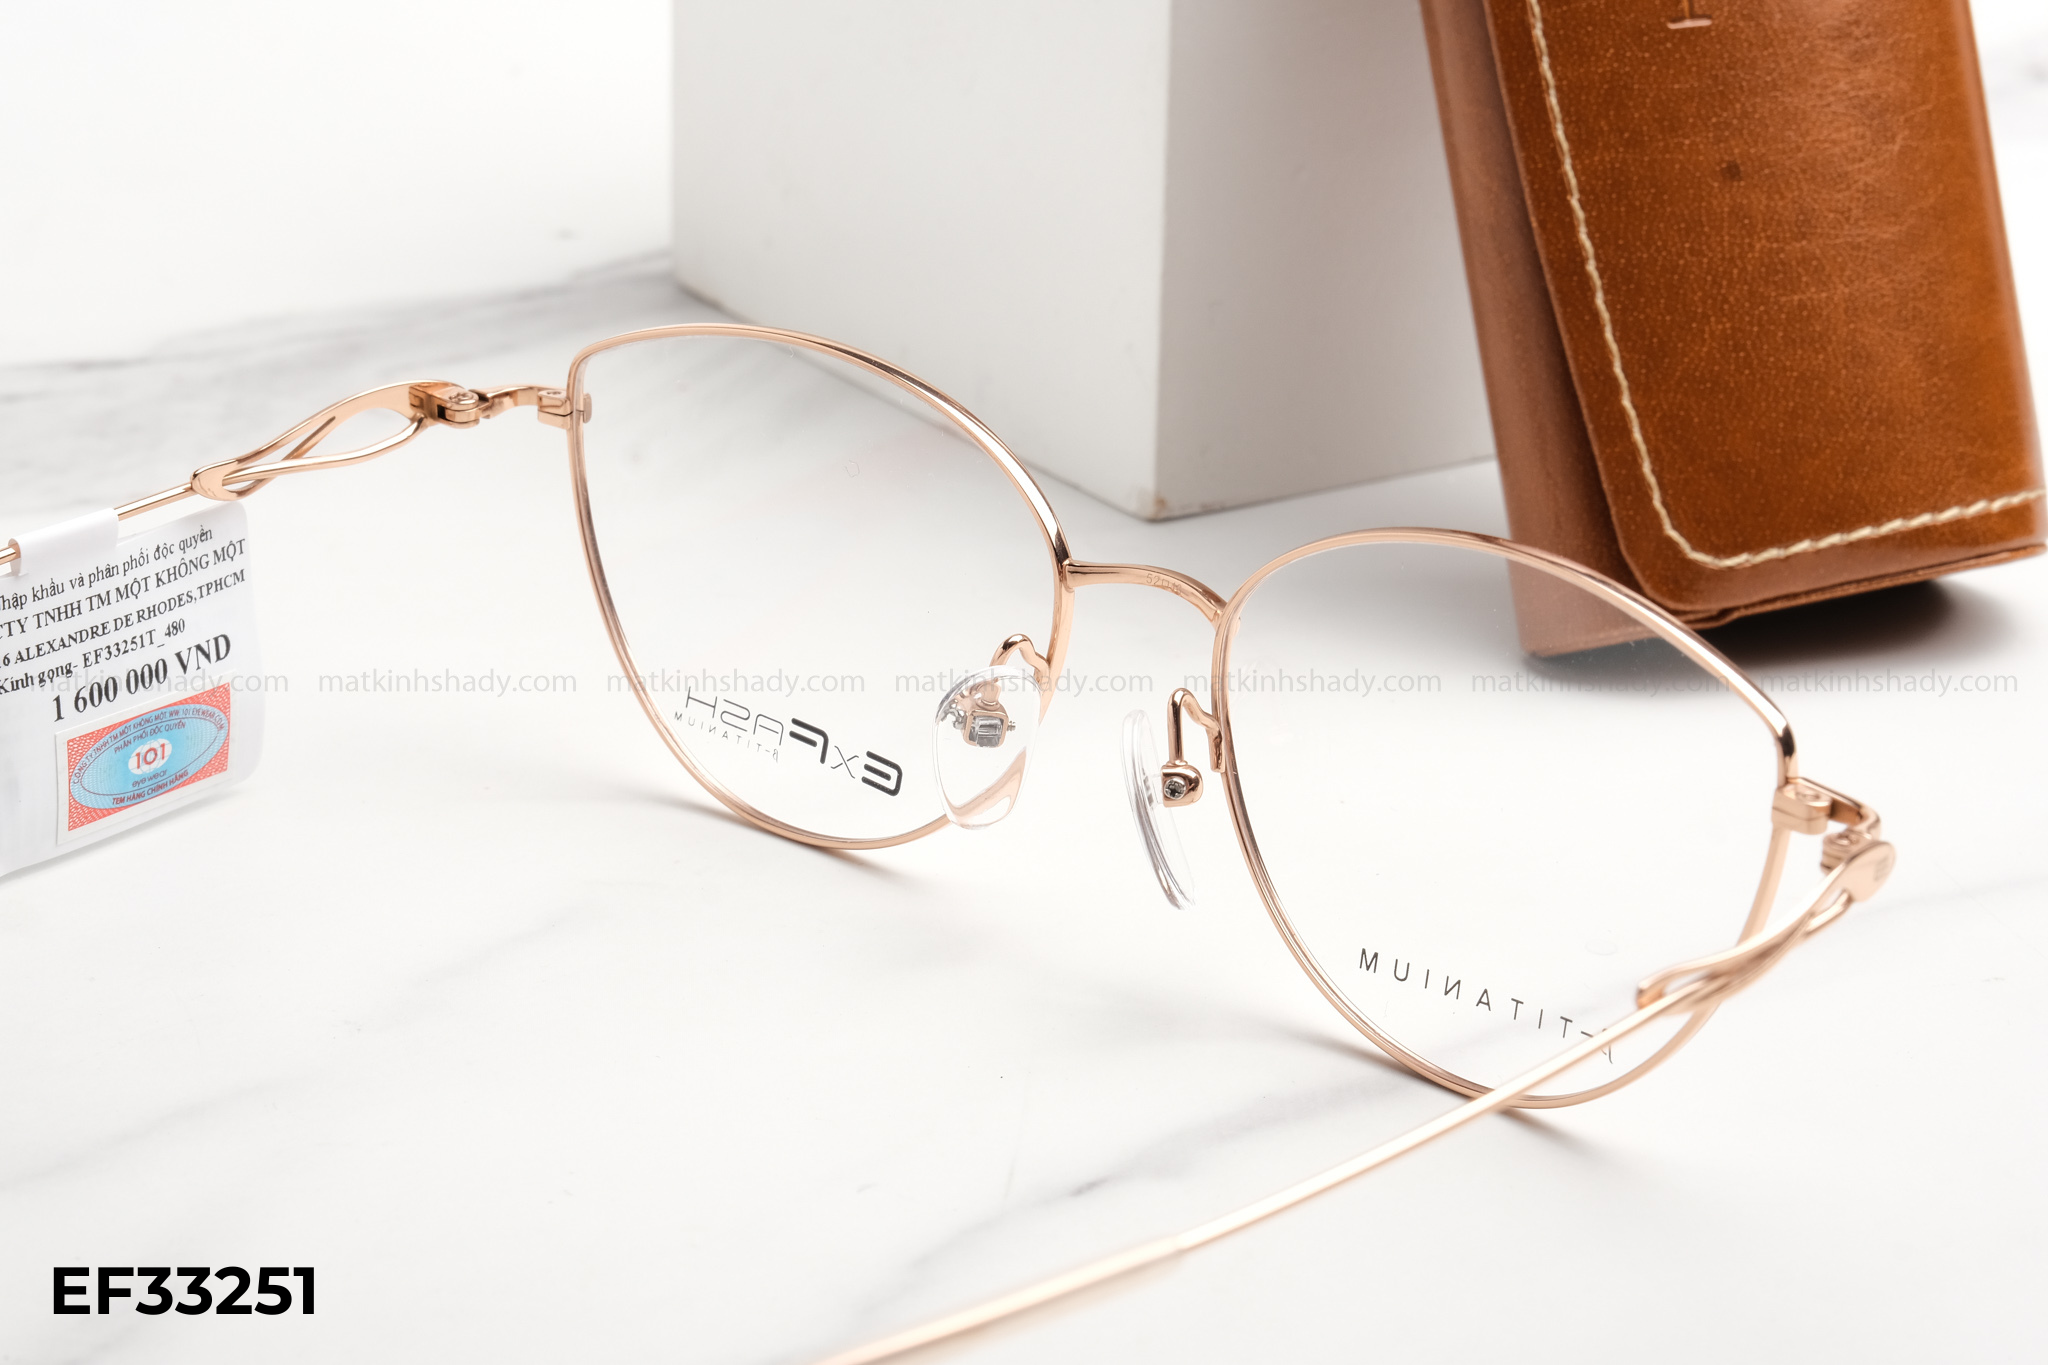  Exfash Eyewear - Glasses - EF33251 